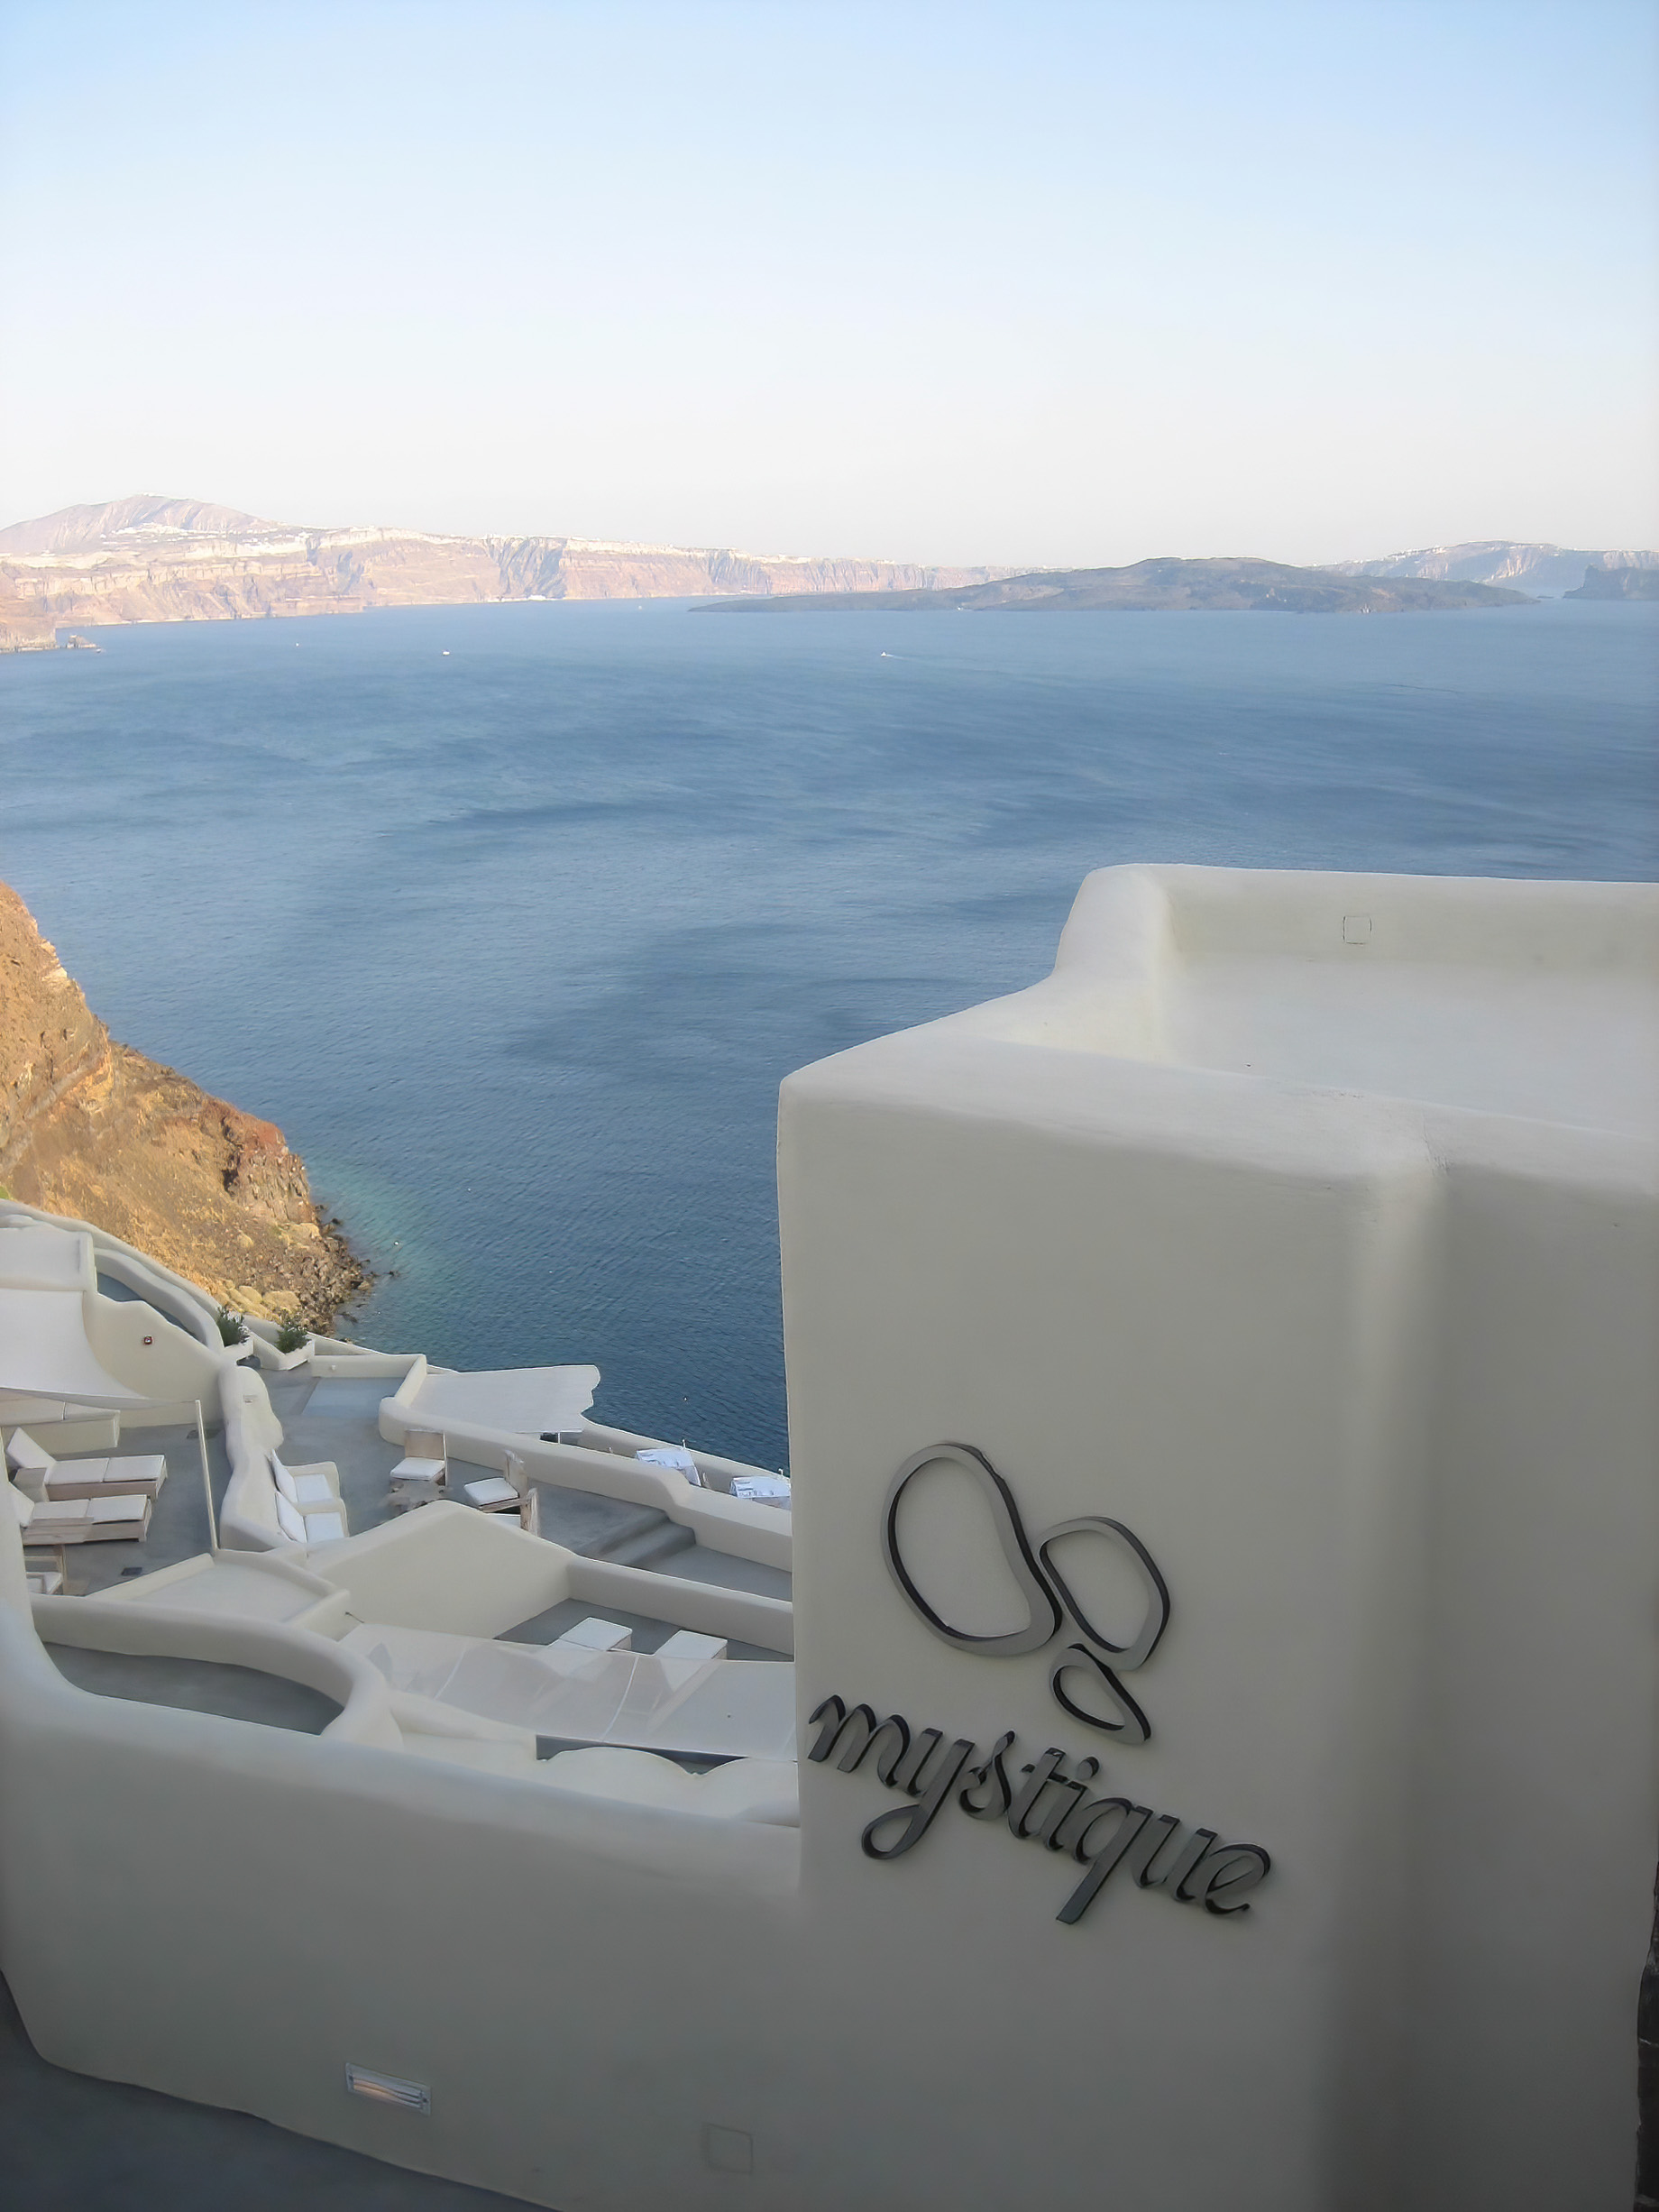 Mystique Hotel Santorini – Oia, Santorini Island, Greece – Mystique Ocean View